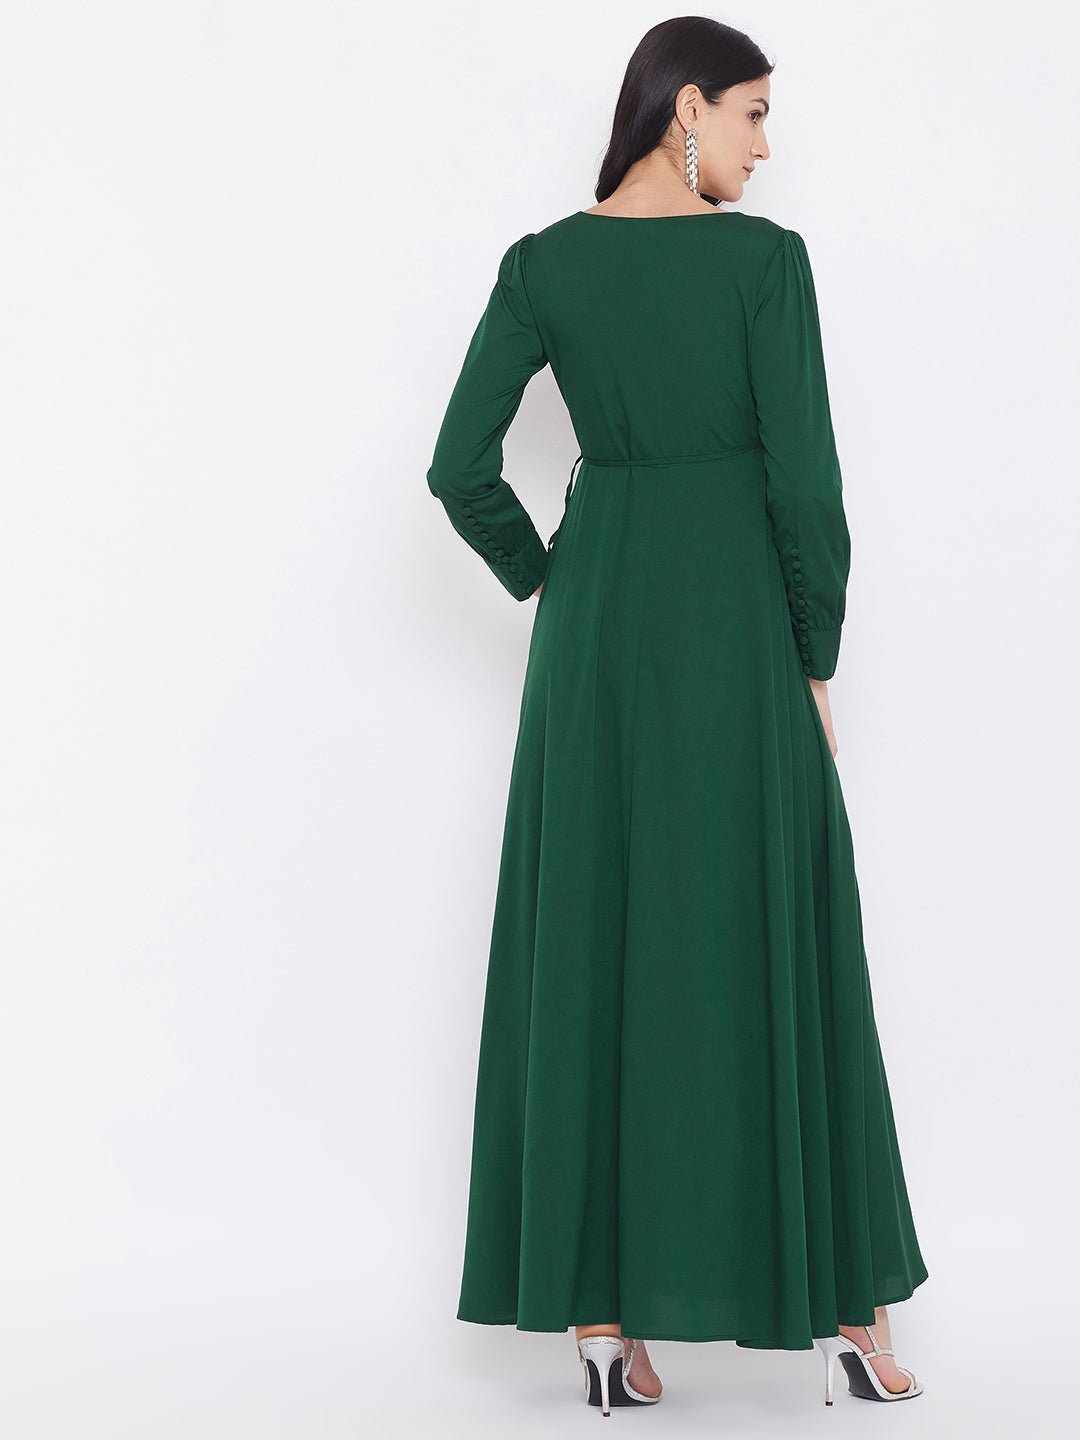 Folk Republic Women Solid Dark Green V-Neck Tie-Up Wrap Maxi Dress - #folk republic#